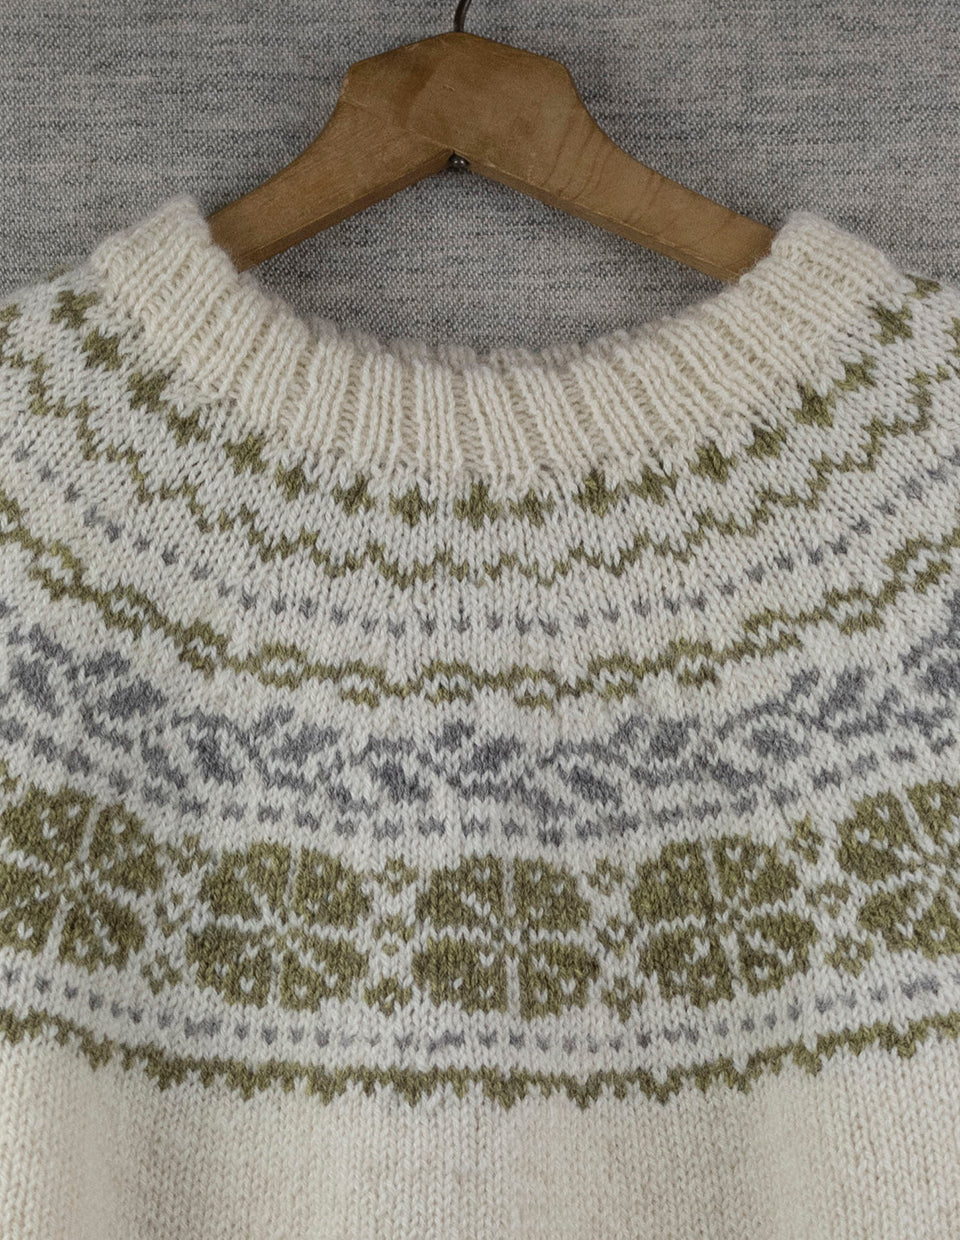 Markens grøde, hand knitted sweater